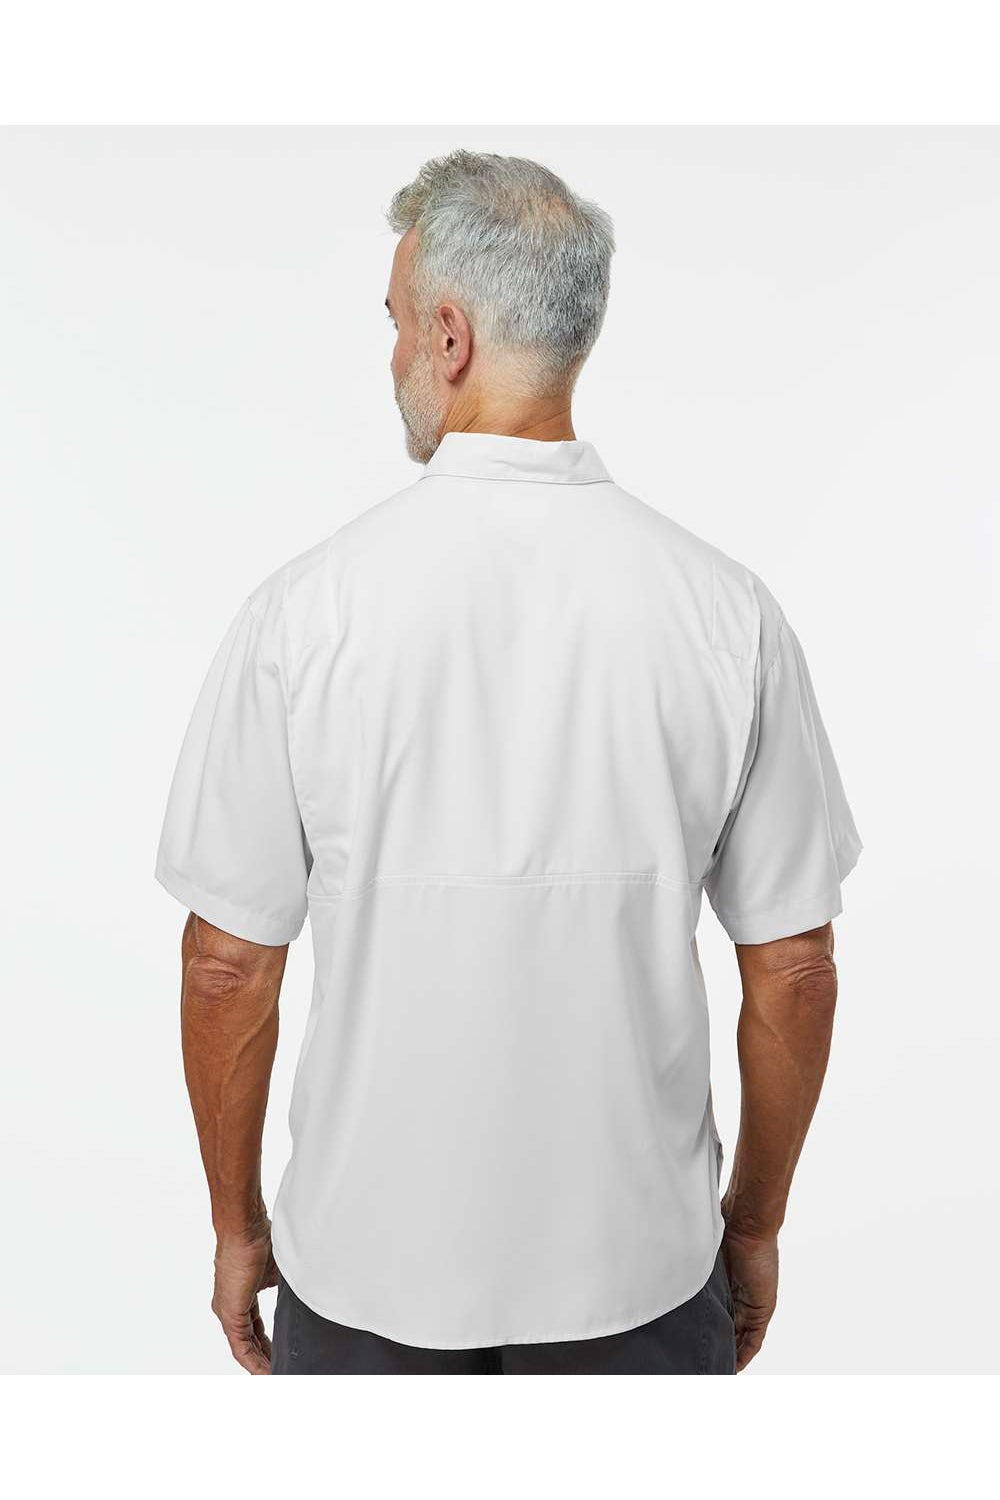 Paragon 700 Mens Hatteras Performance Short Sleeve Button Down Shirt Aluminum Grey Model Back